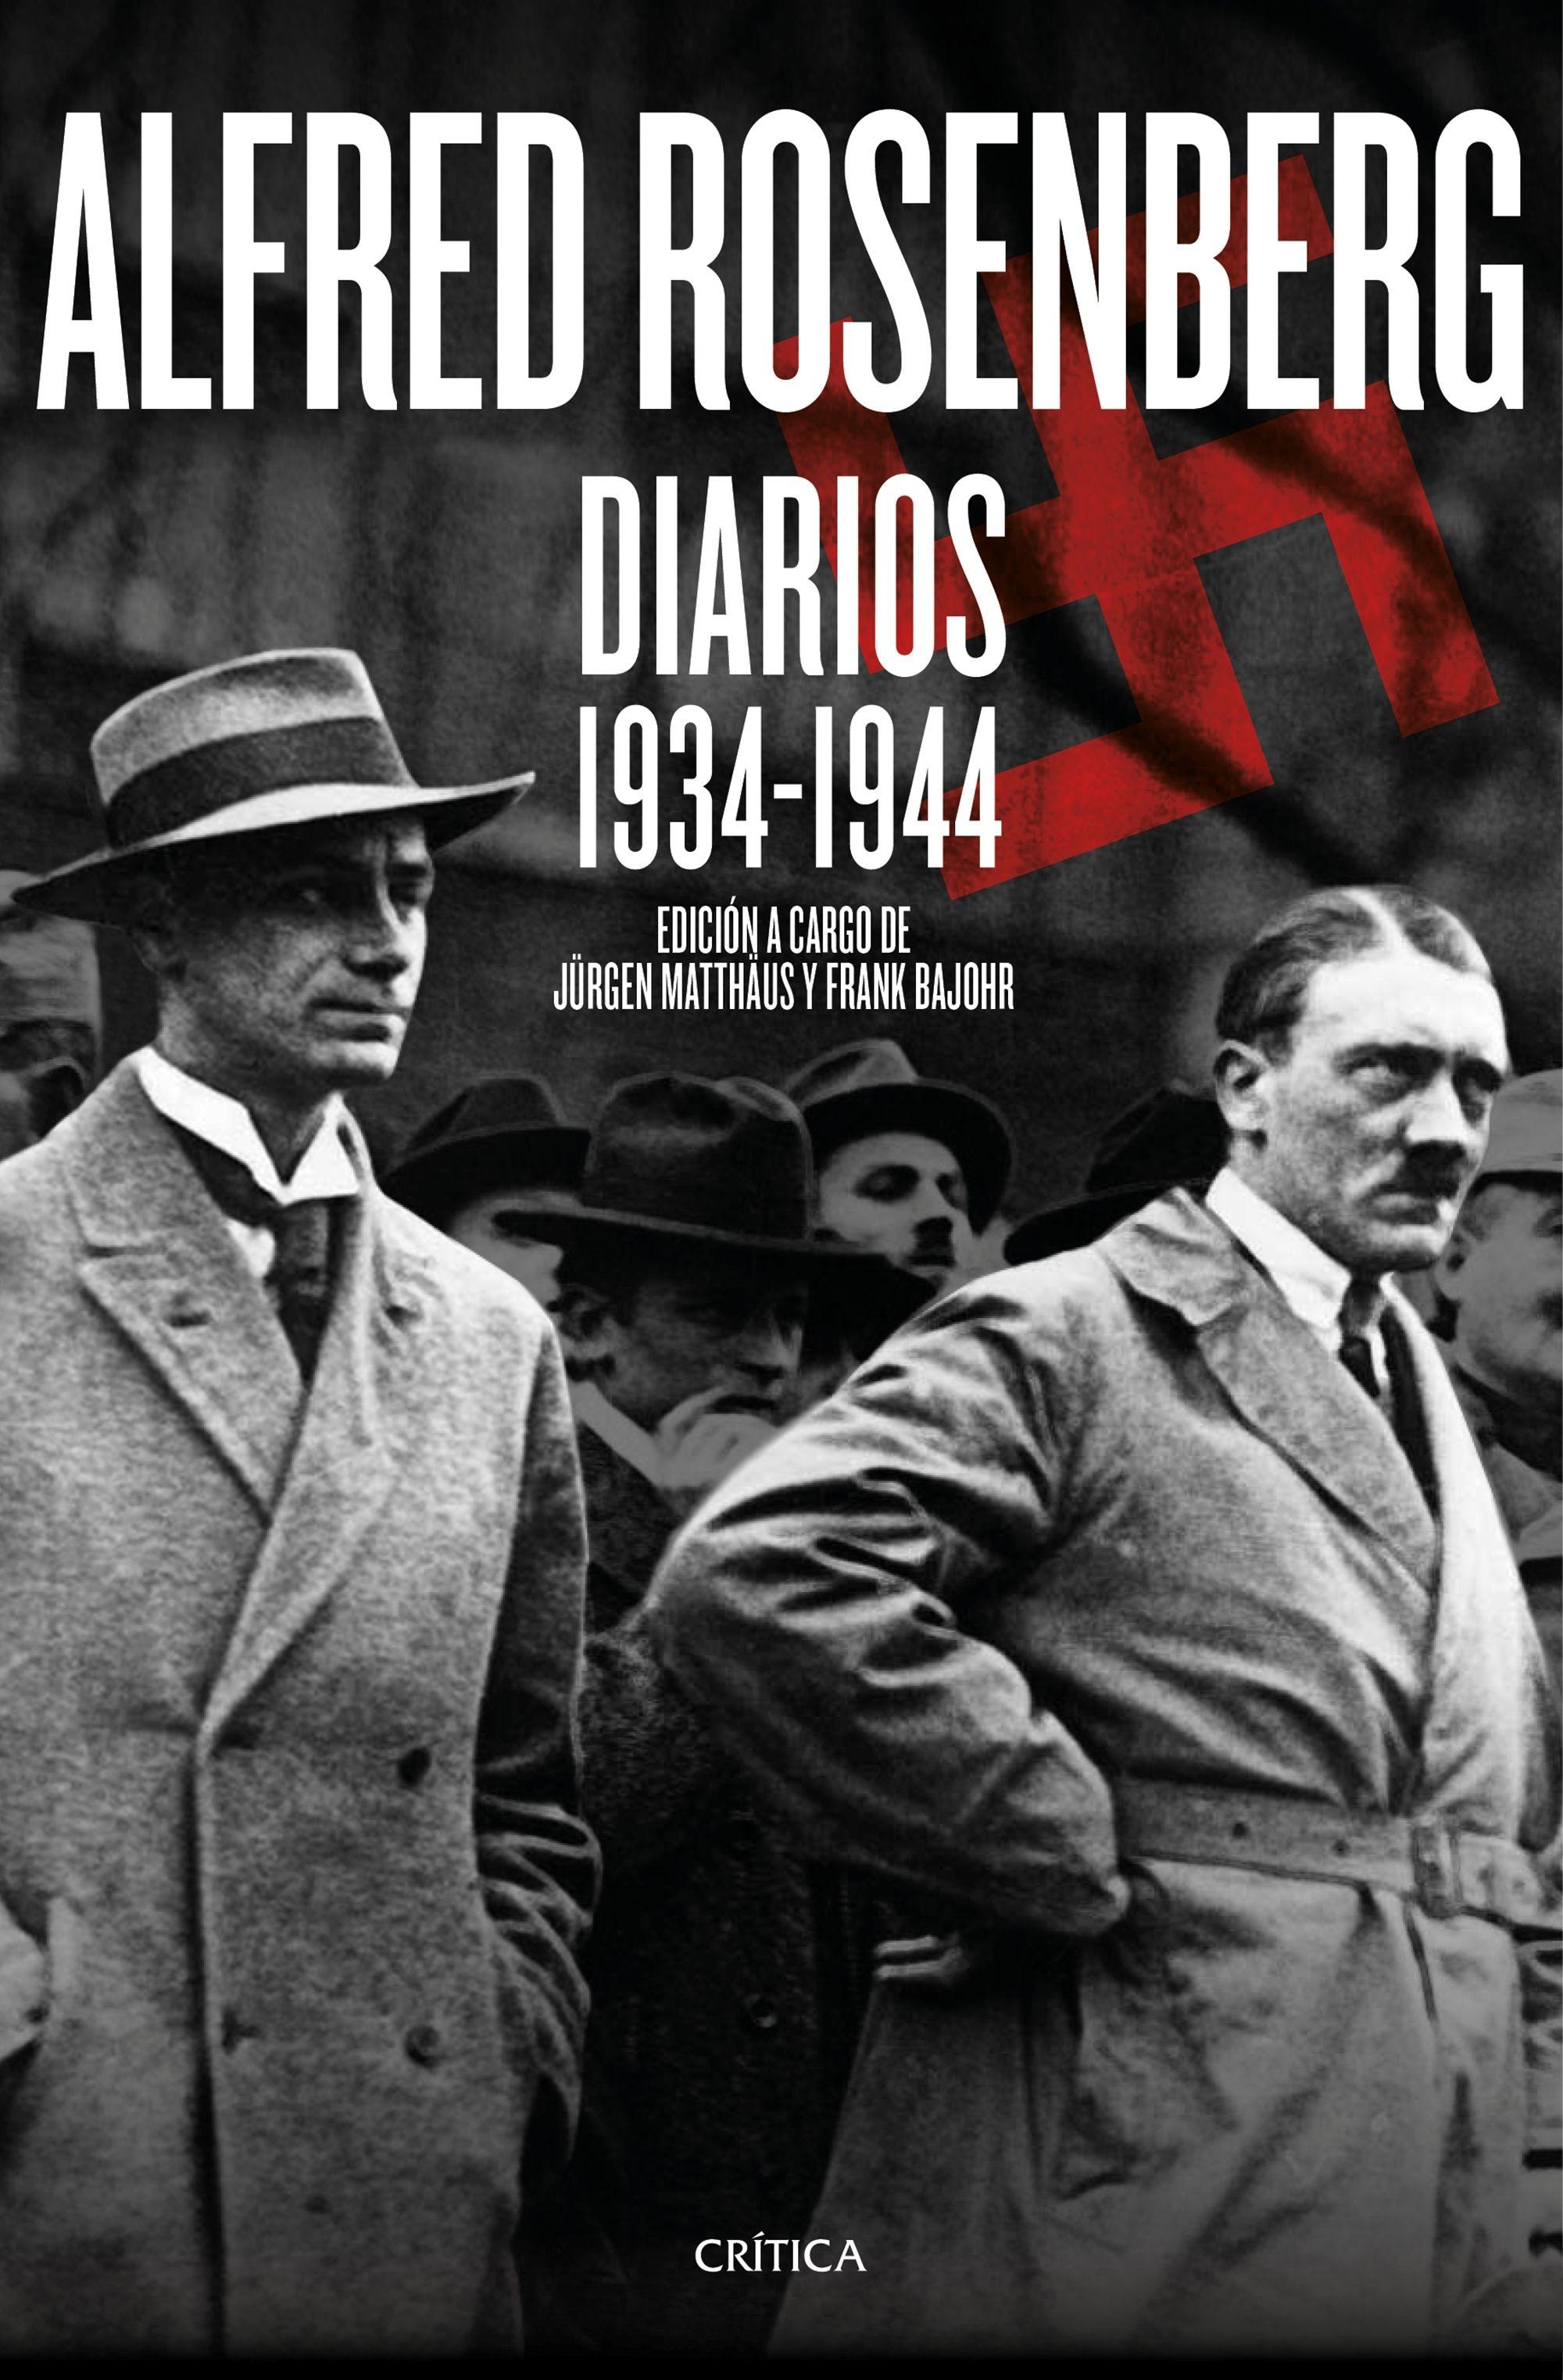 Alfred Rosenberg "Diarios 1934-1944"